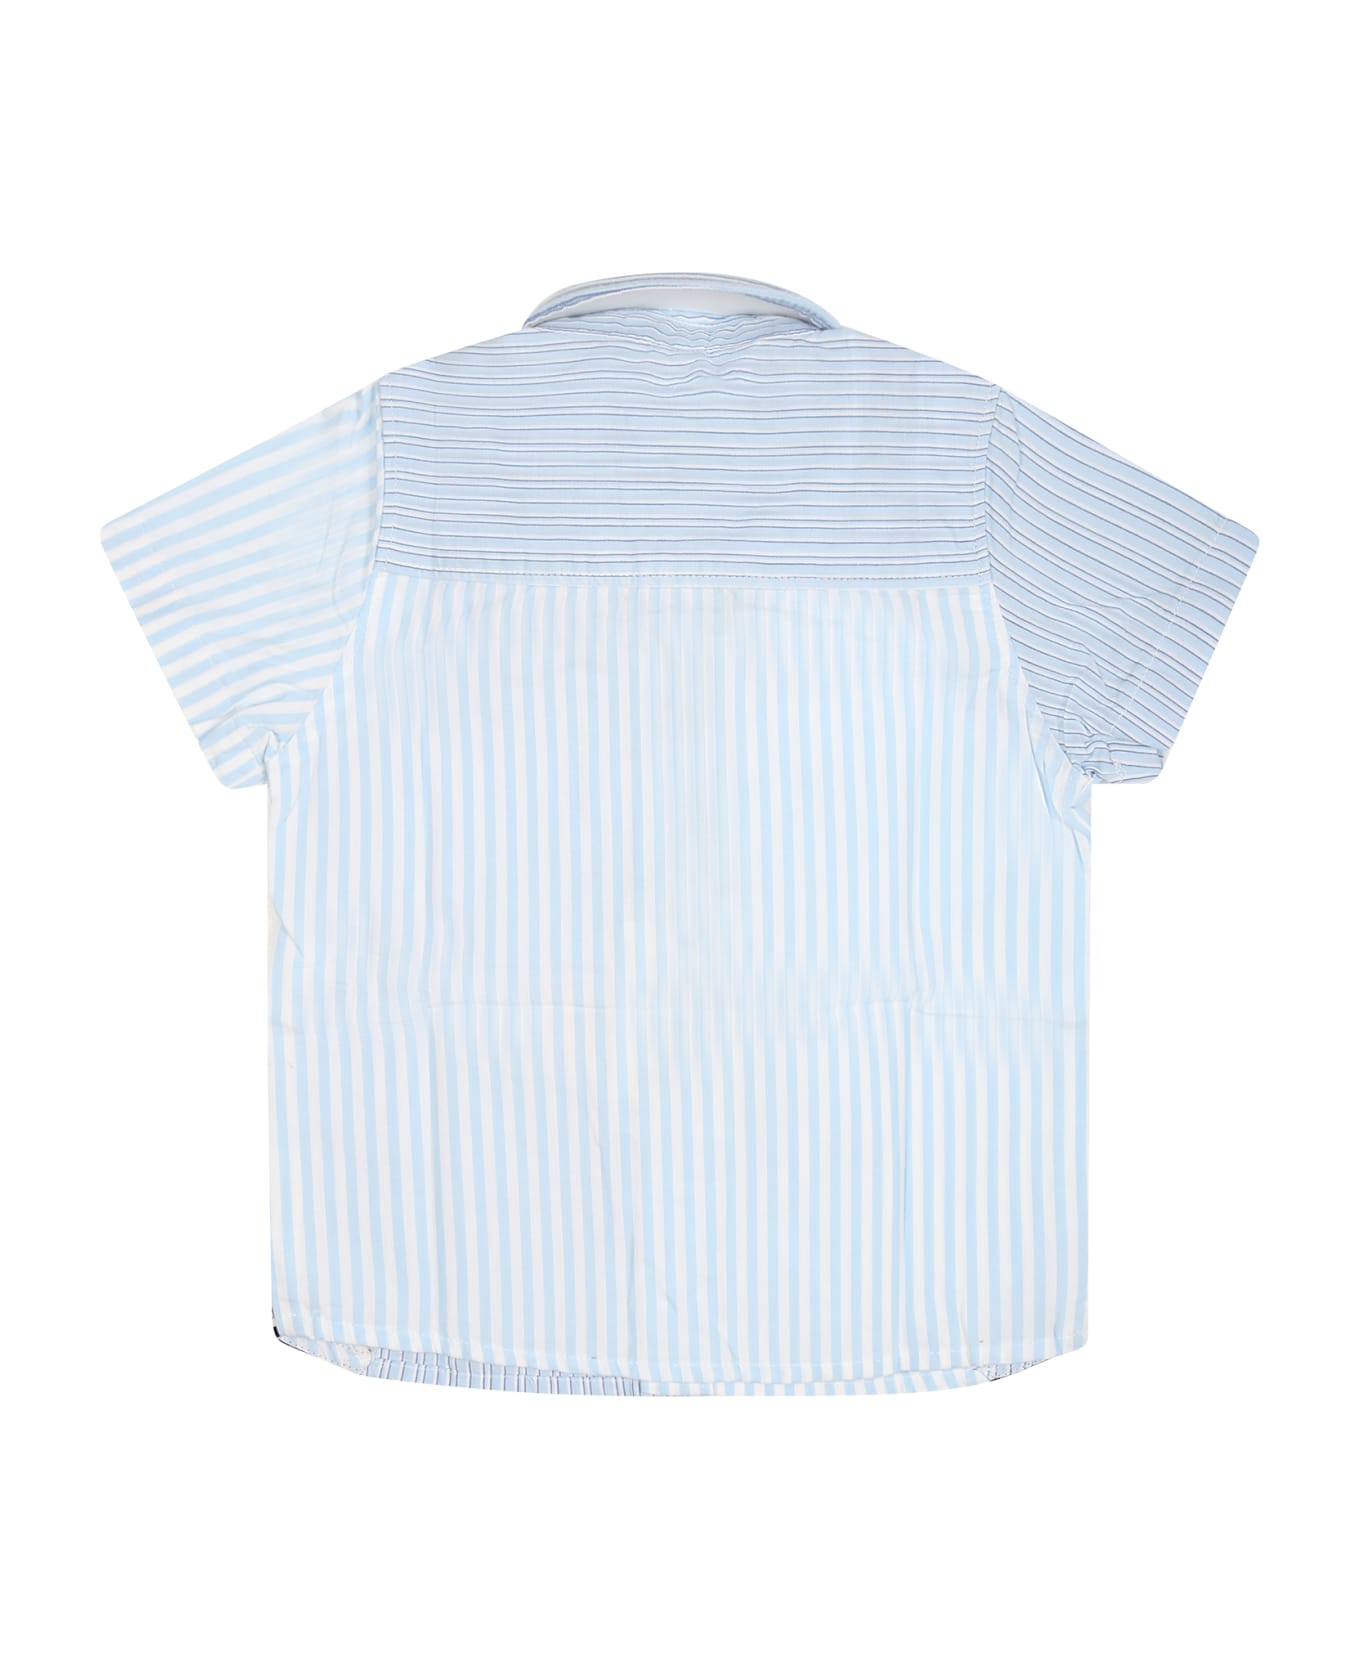 Hugo Boss Light Blue Shirt For Baby Boy With Stripes - Light Blue シャツ